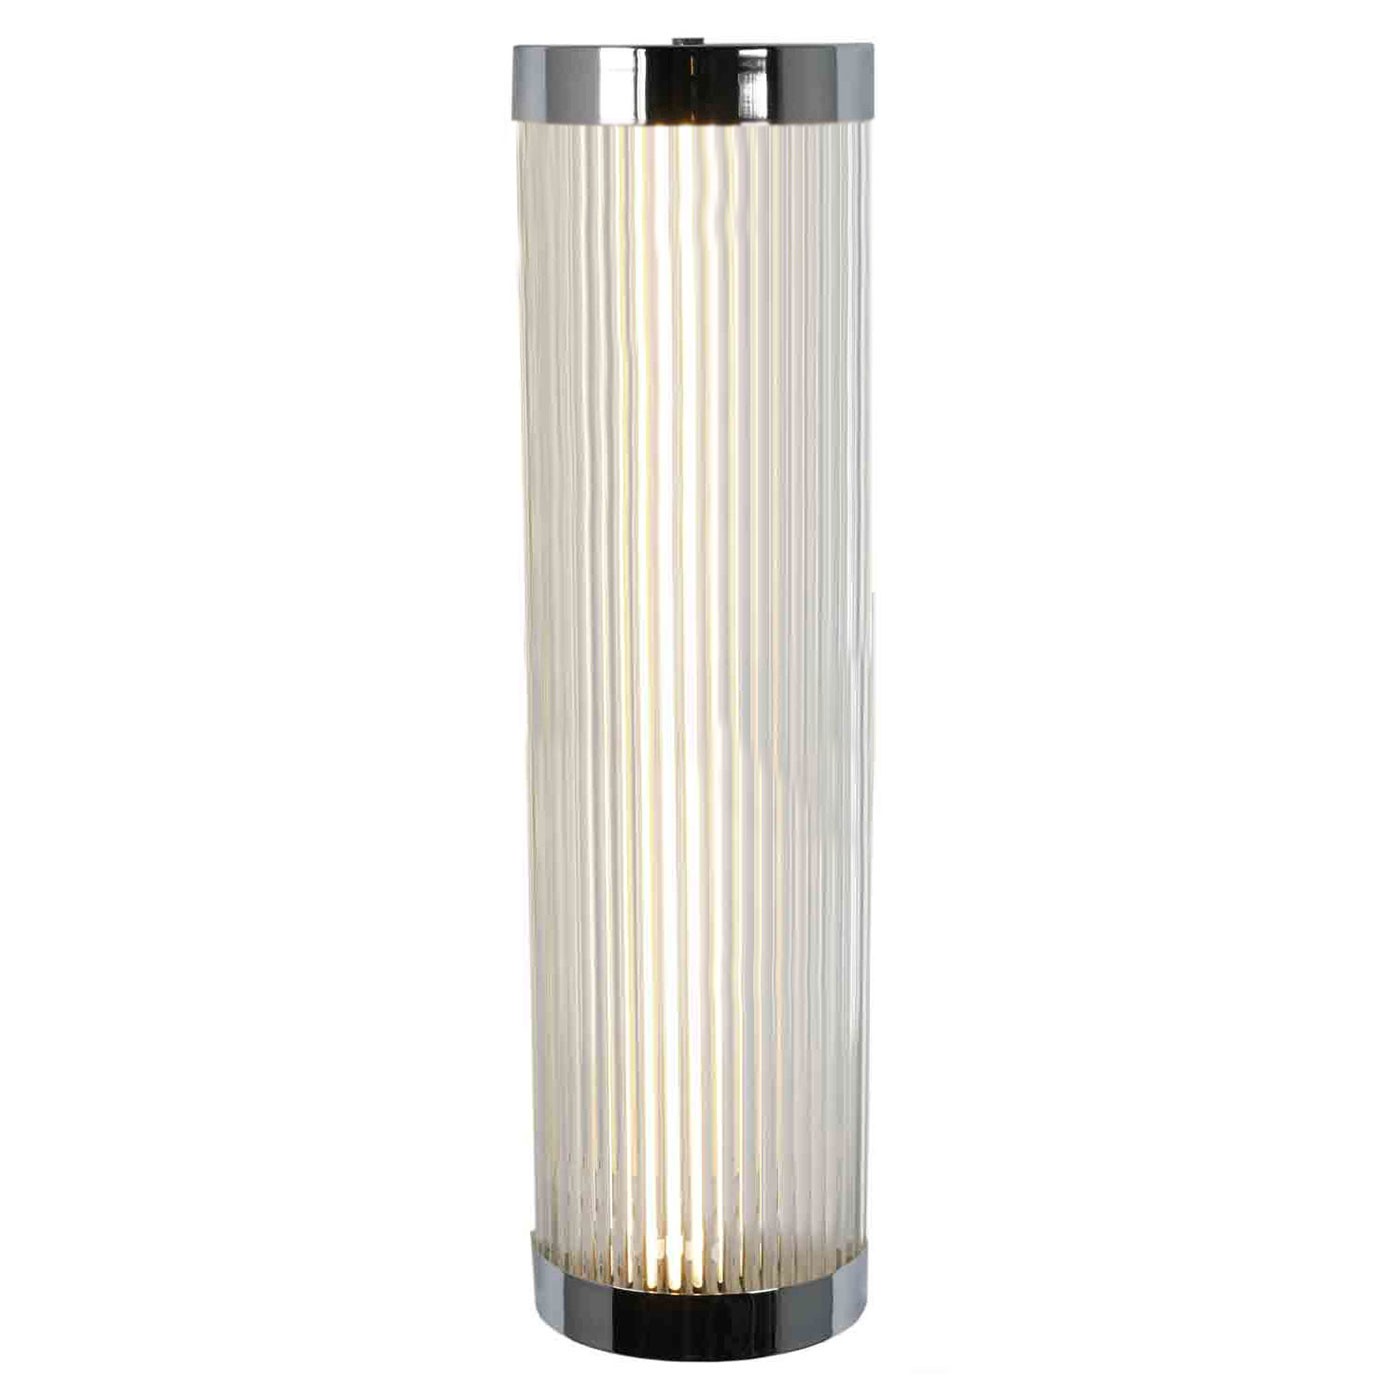 Original Btc Pillar LED Wall Light | HEAL'S